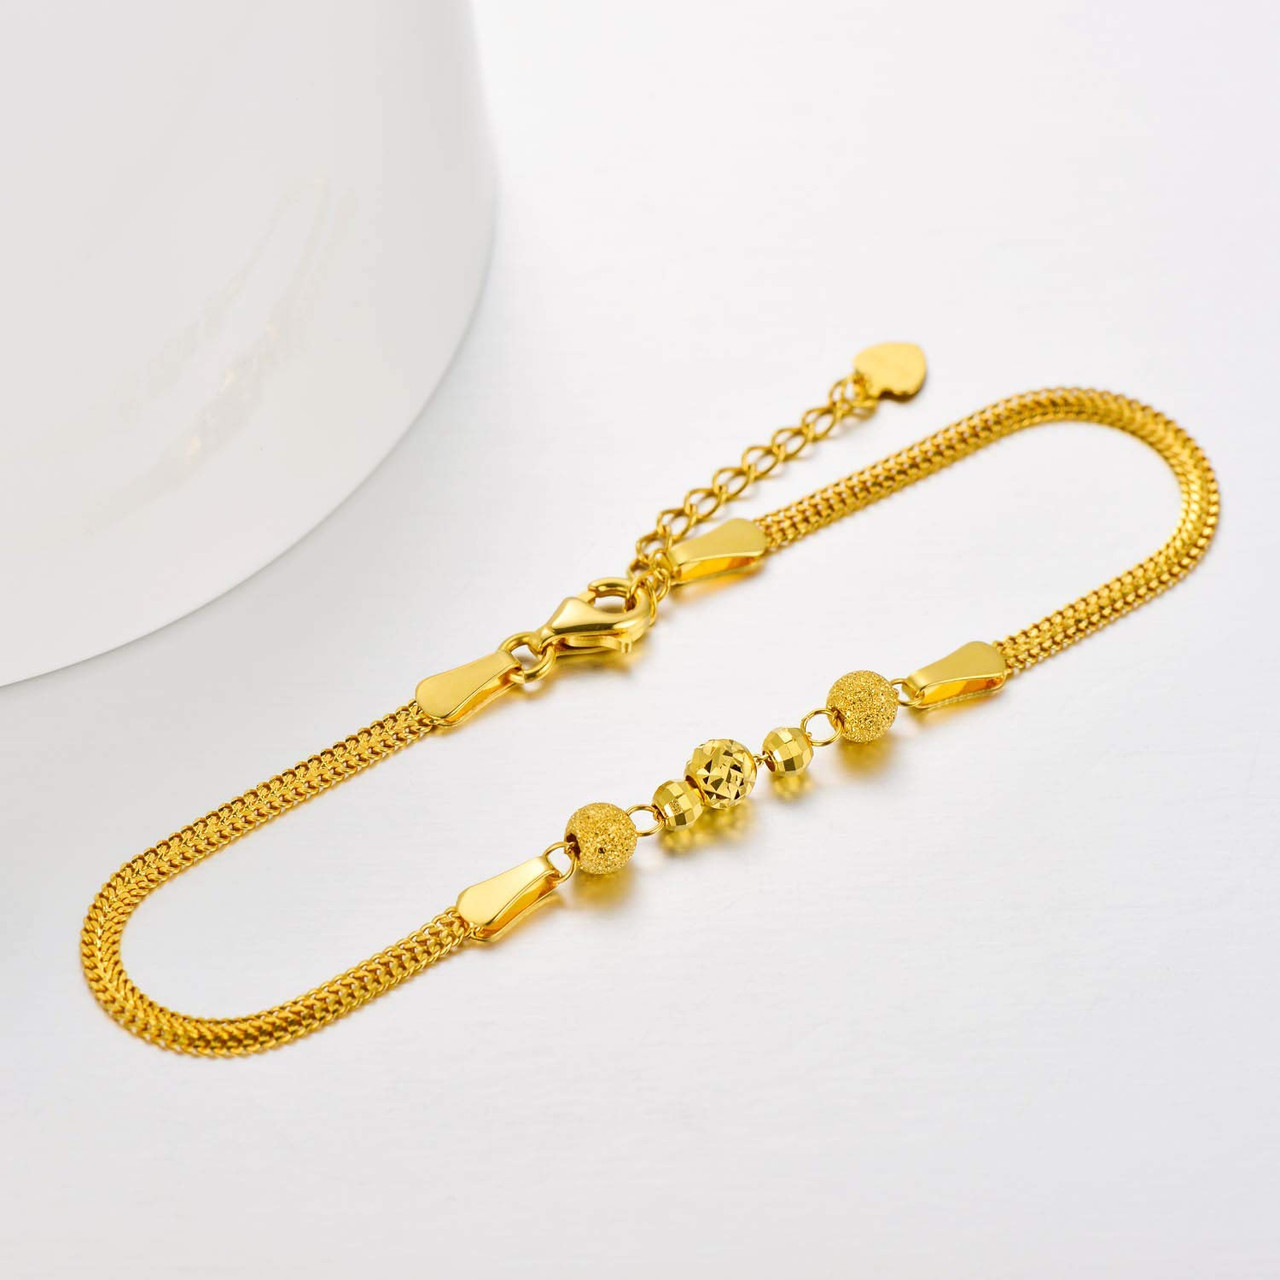 Louis Vuitton Empreinte 18K Yellow Gold Bangle Size Medium 16